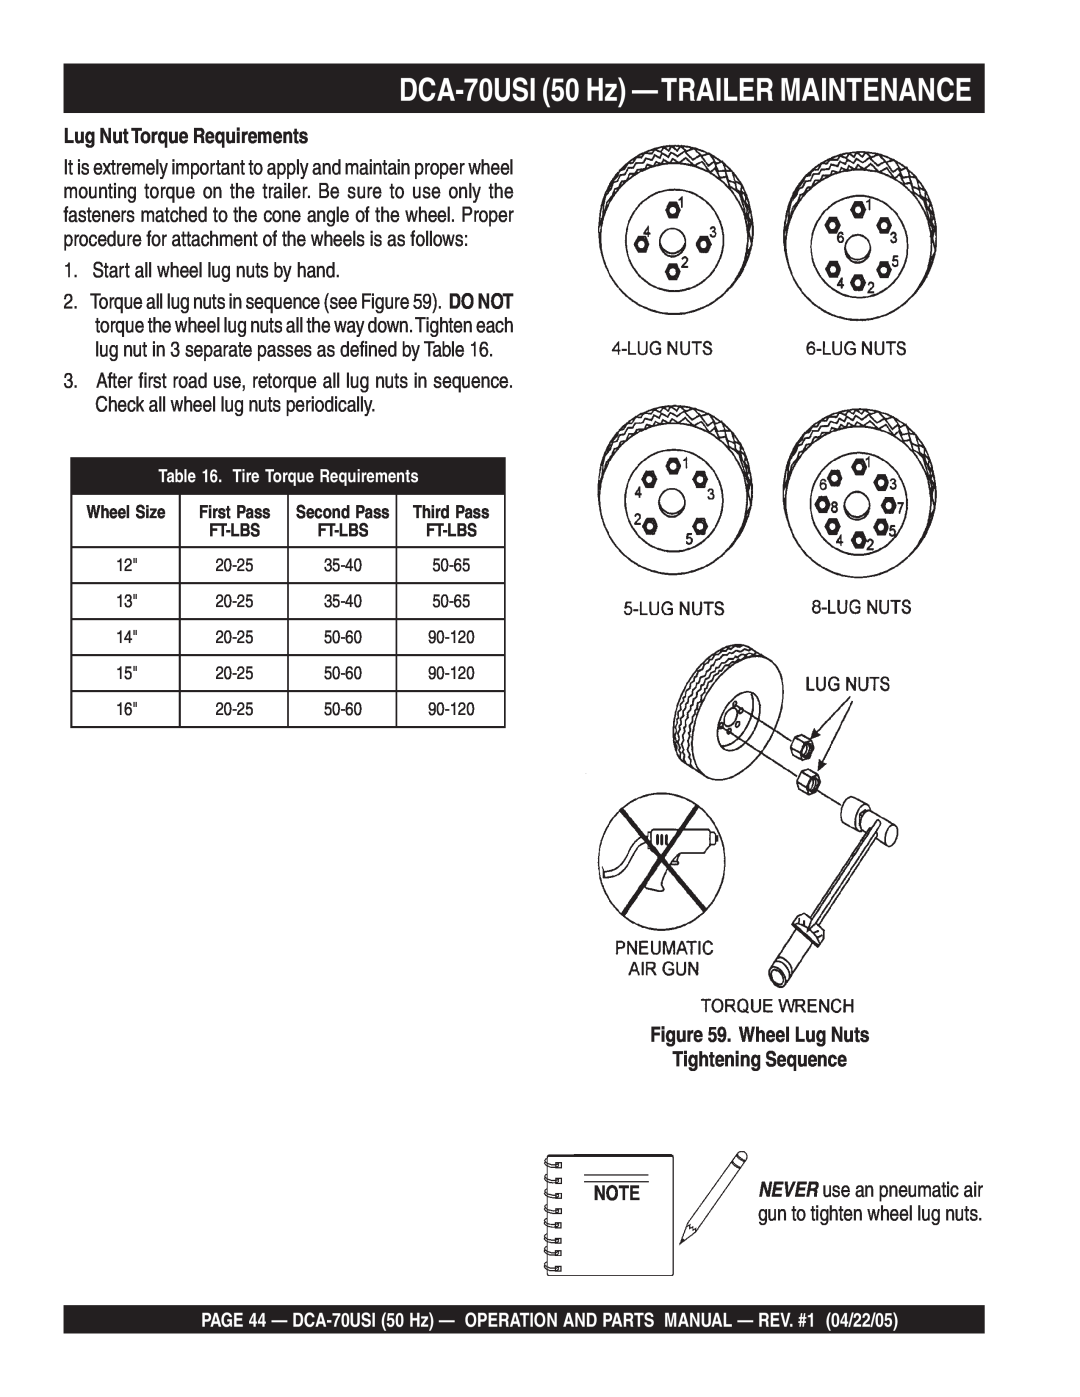 Multiquip DCA-70USI50 Hz —TRAILERMAINTENANCE, Lug Nut Torque Requirements, Wheel Lug Nuts Tightening Sequence 